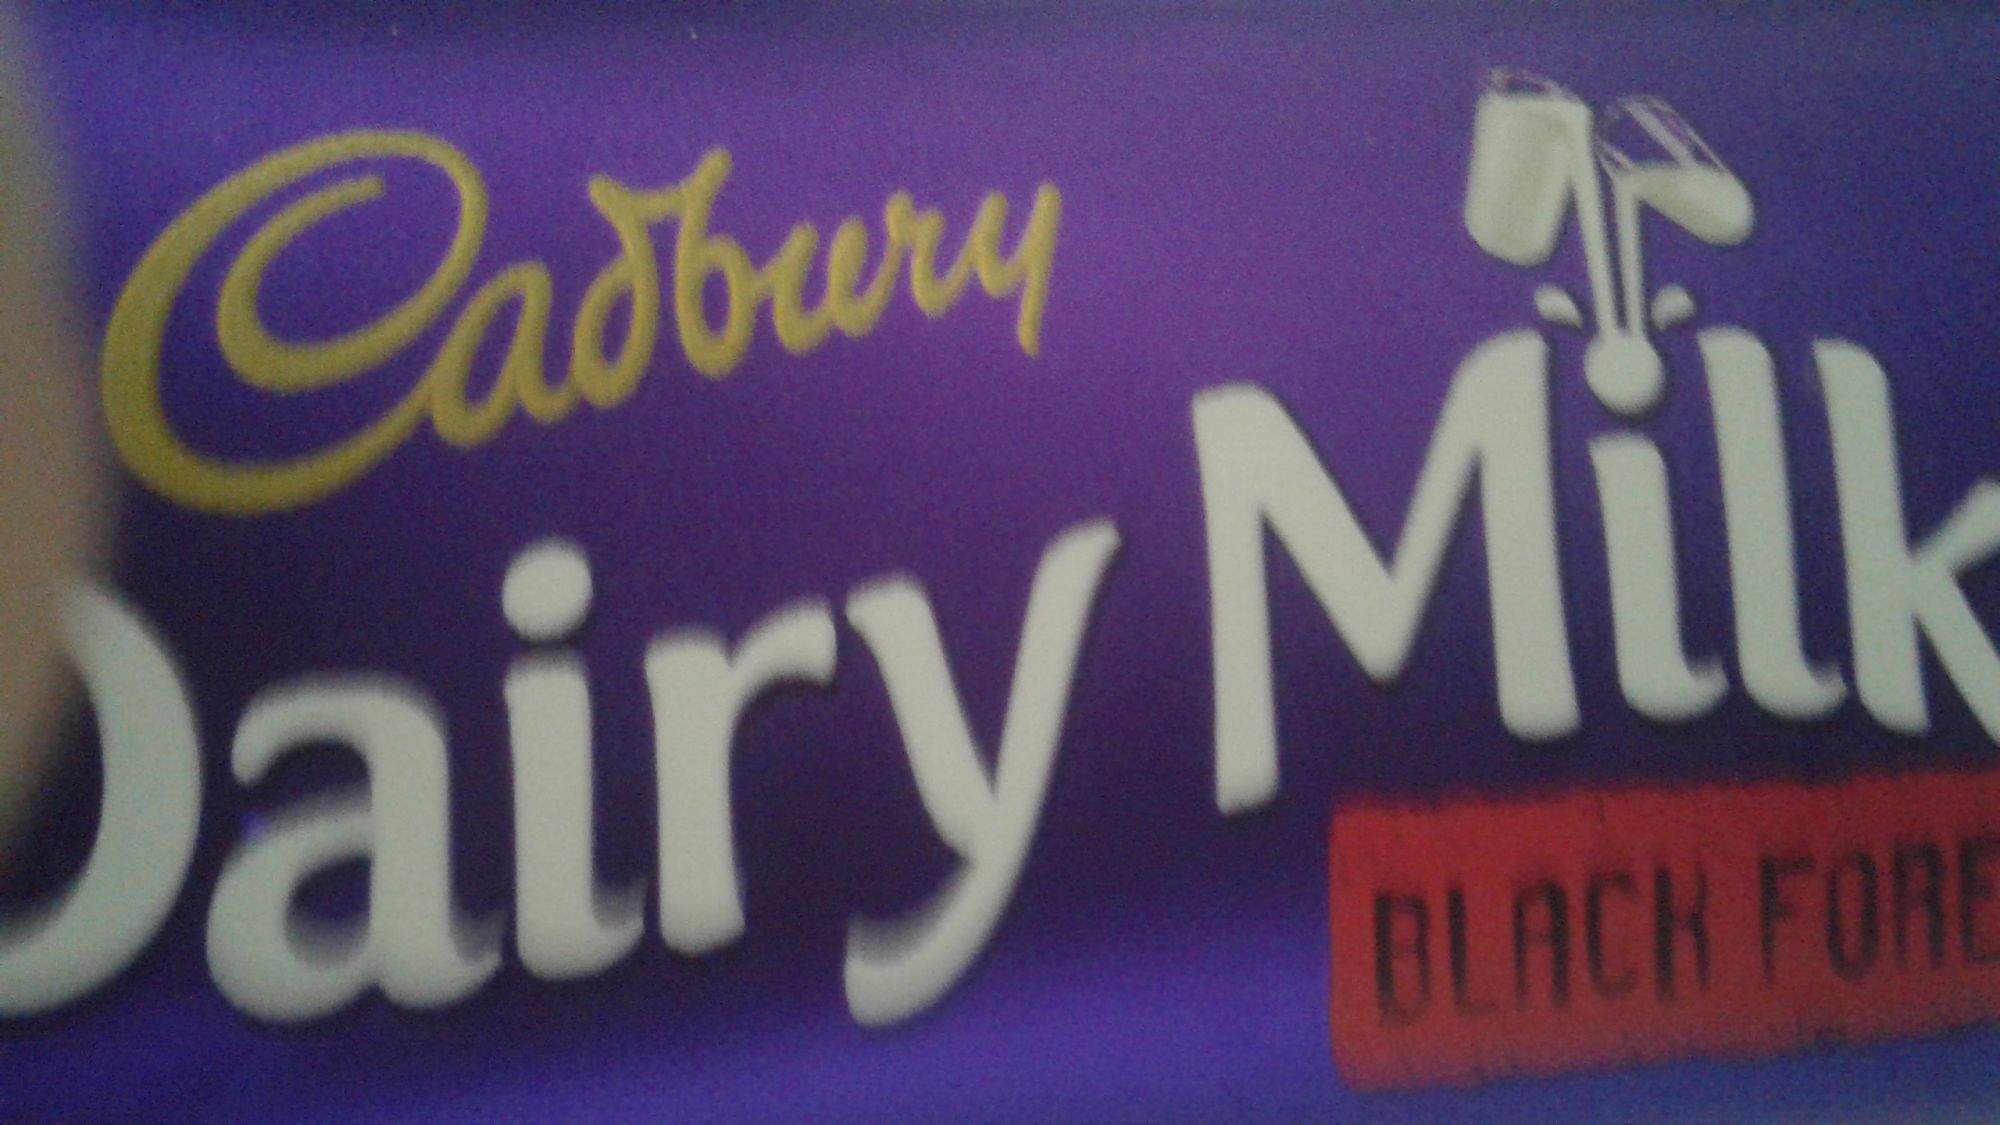 Cadbury Dairy Milk Black Forest reviews